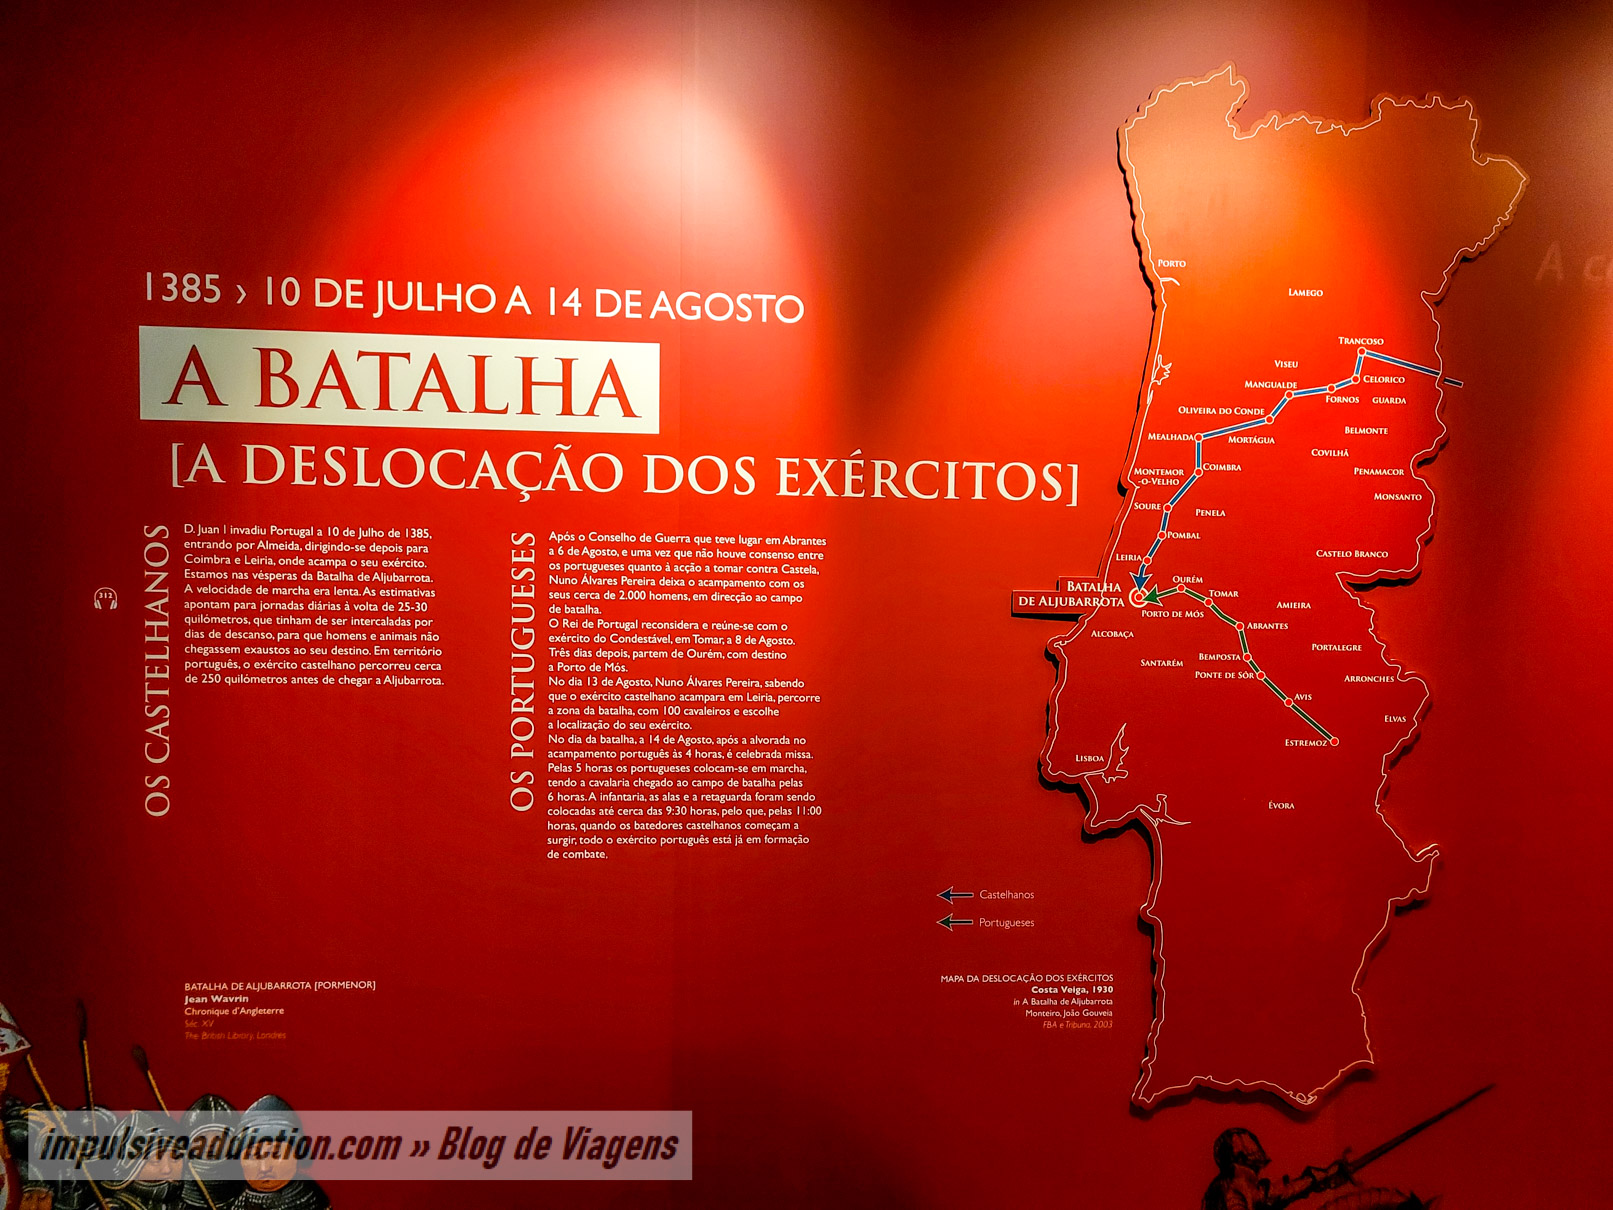 Interpretive Center of the Battle of Aljubarrota